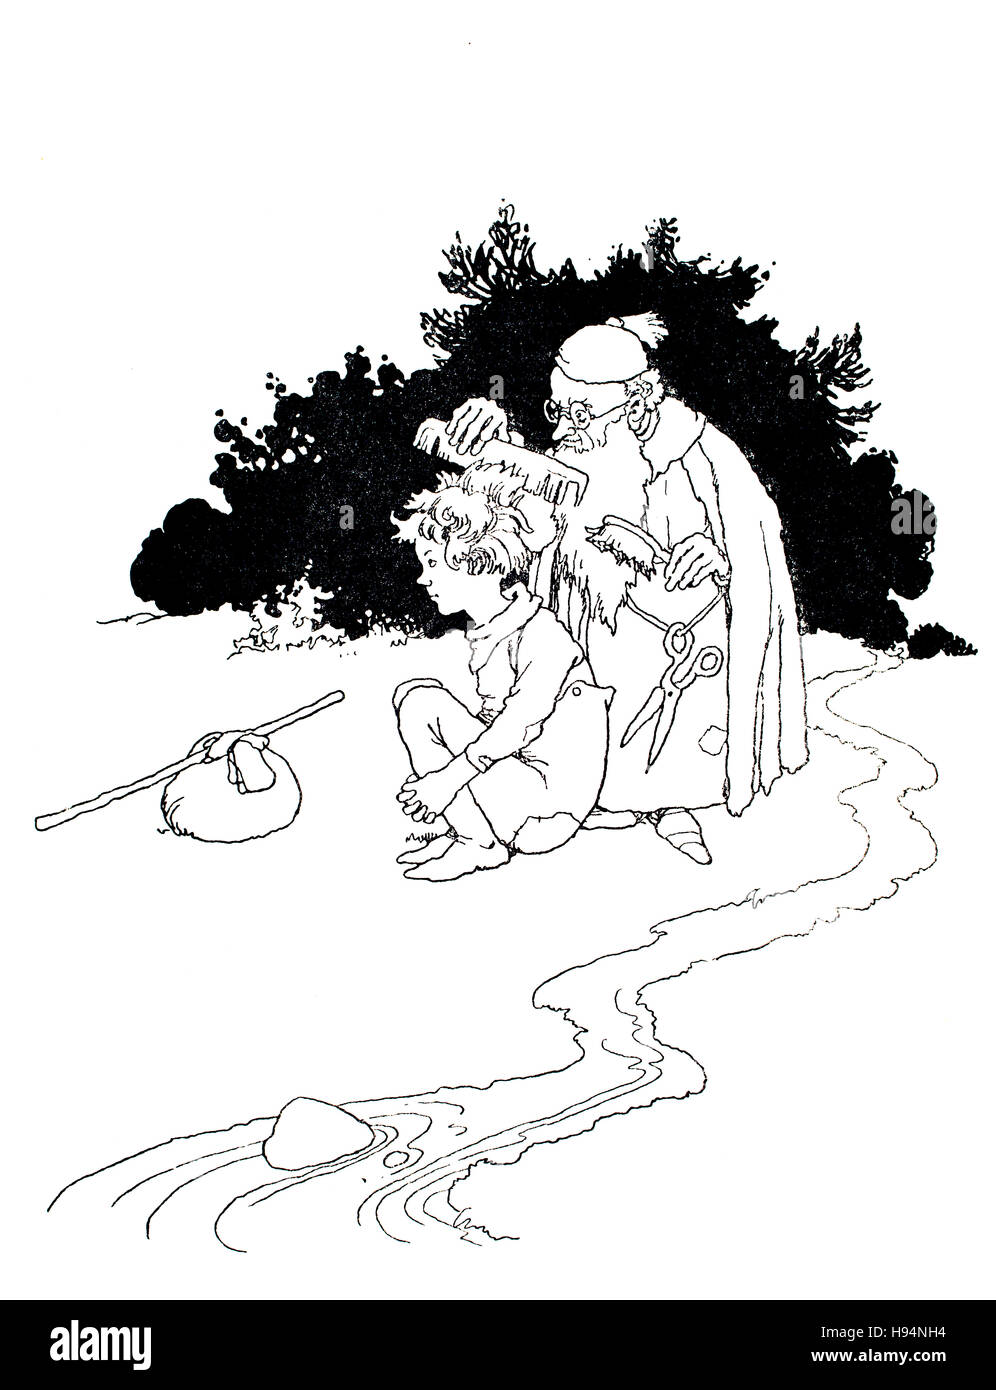 He began to comb poor Gottschalk’s hair, Children’s Book Illustration by William Heath Robinson, from 1934 Book of Goblins, The fairest bride Stock Photo